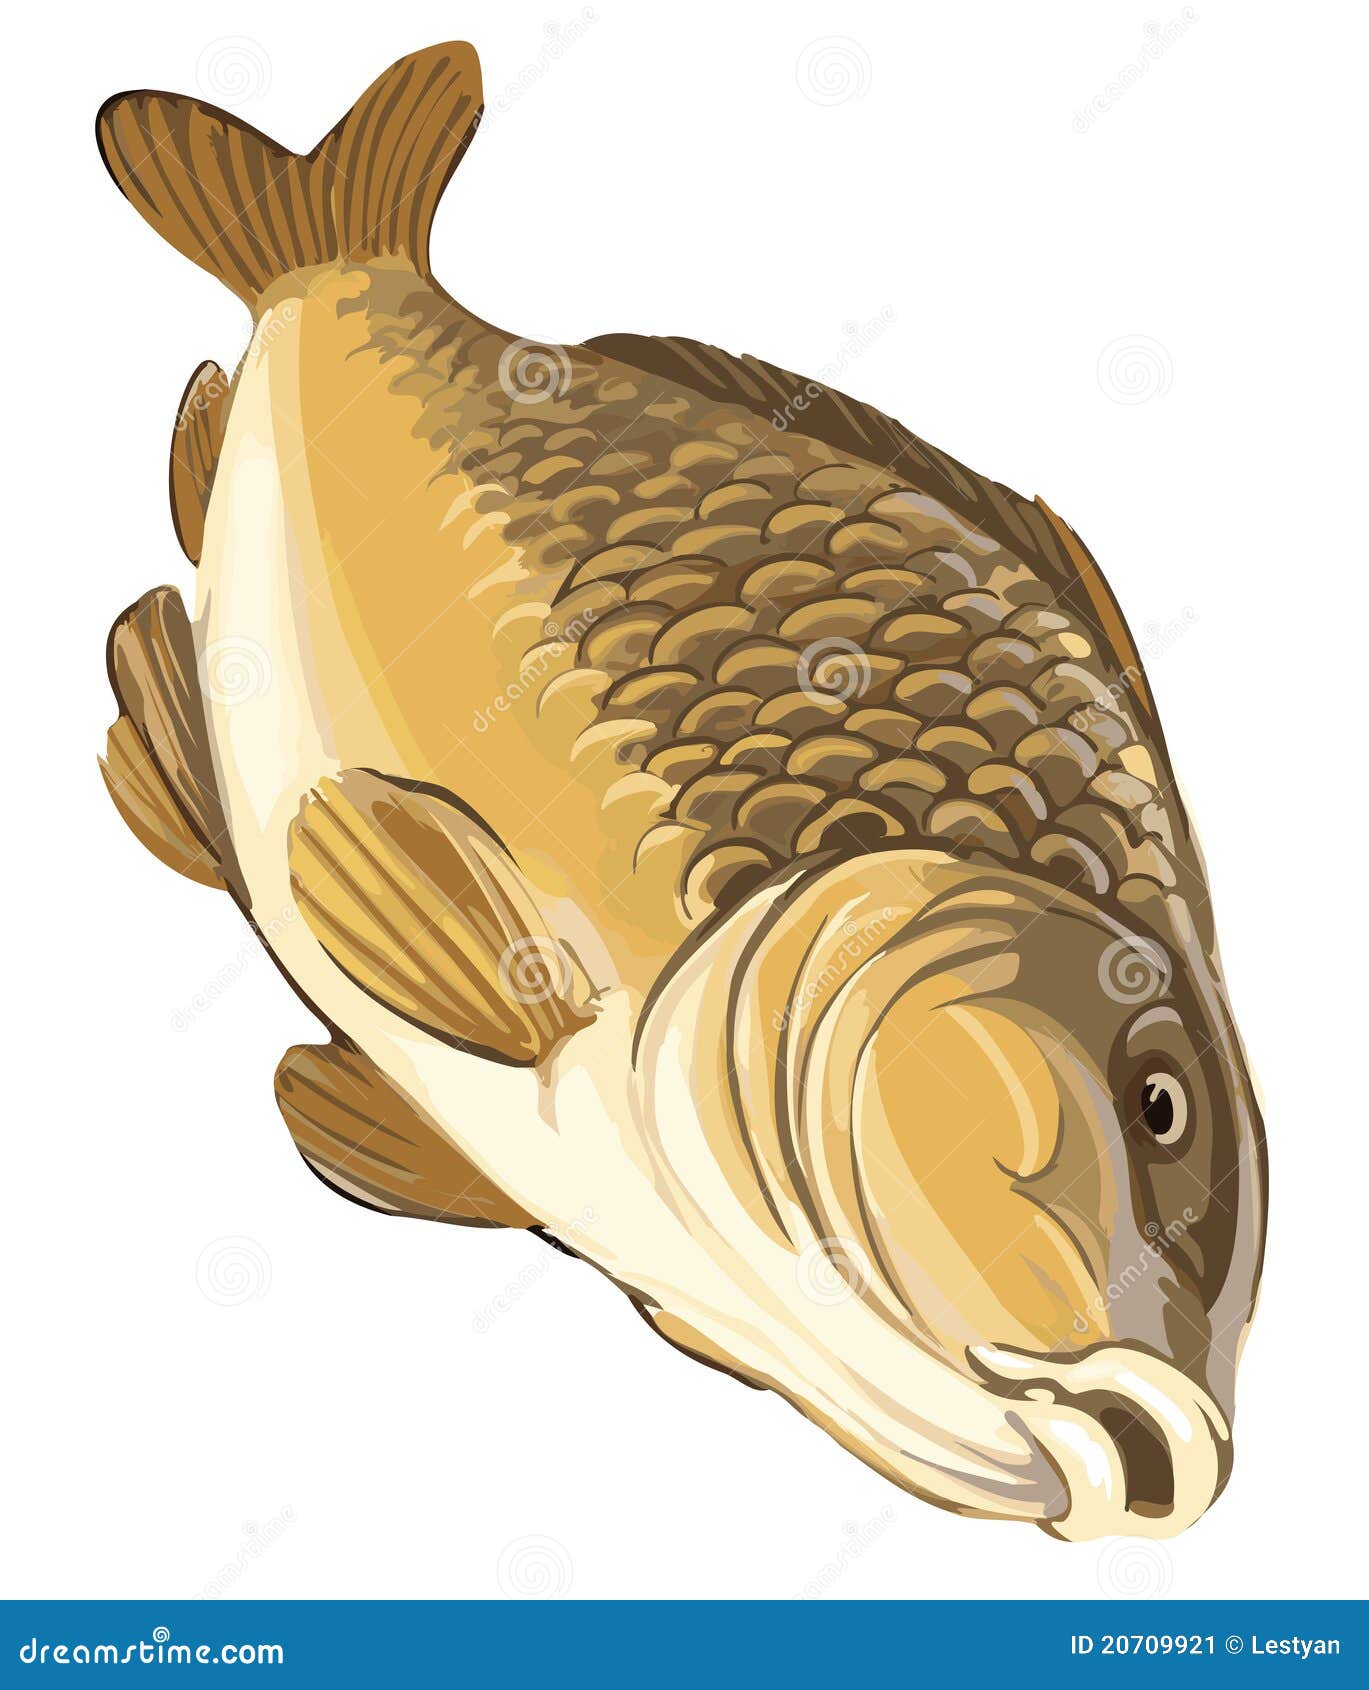 carp fish clip art free - photo #34